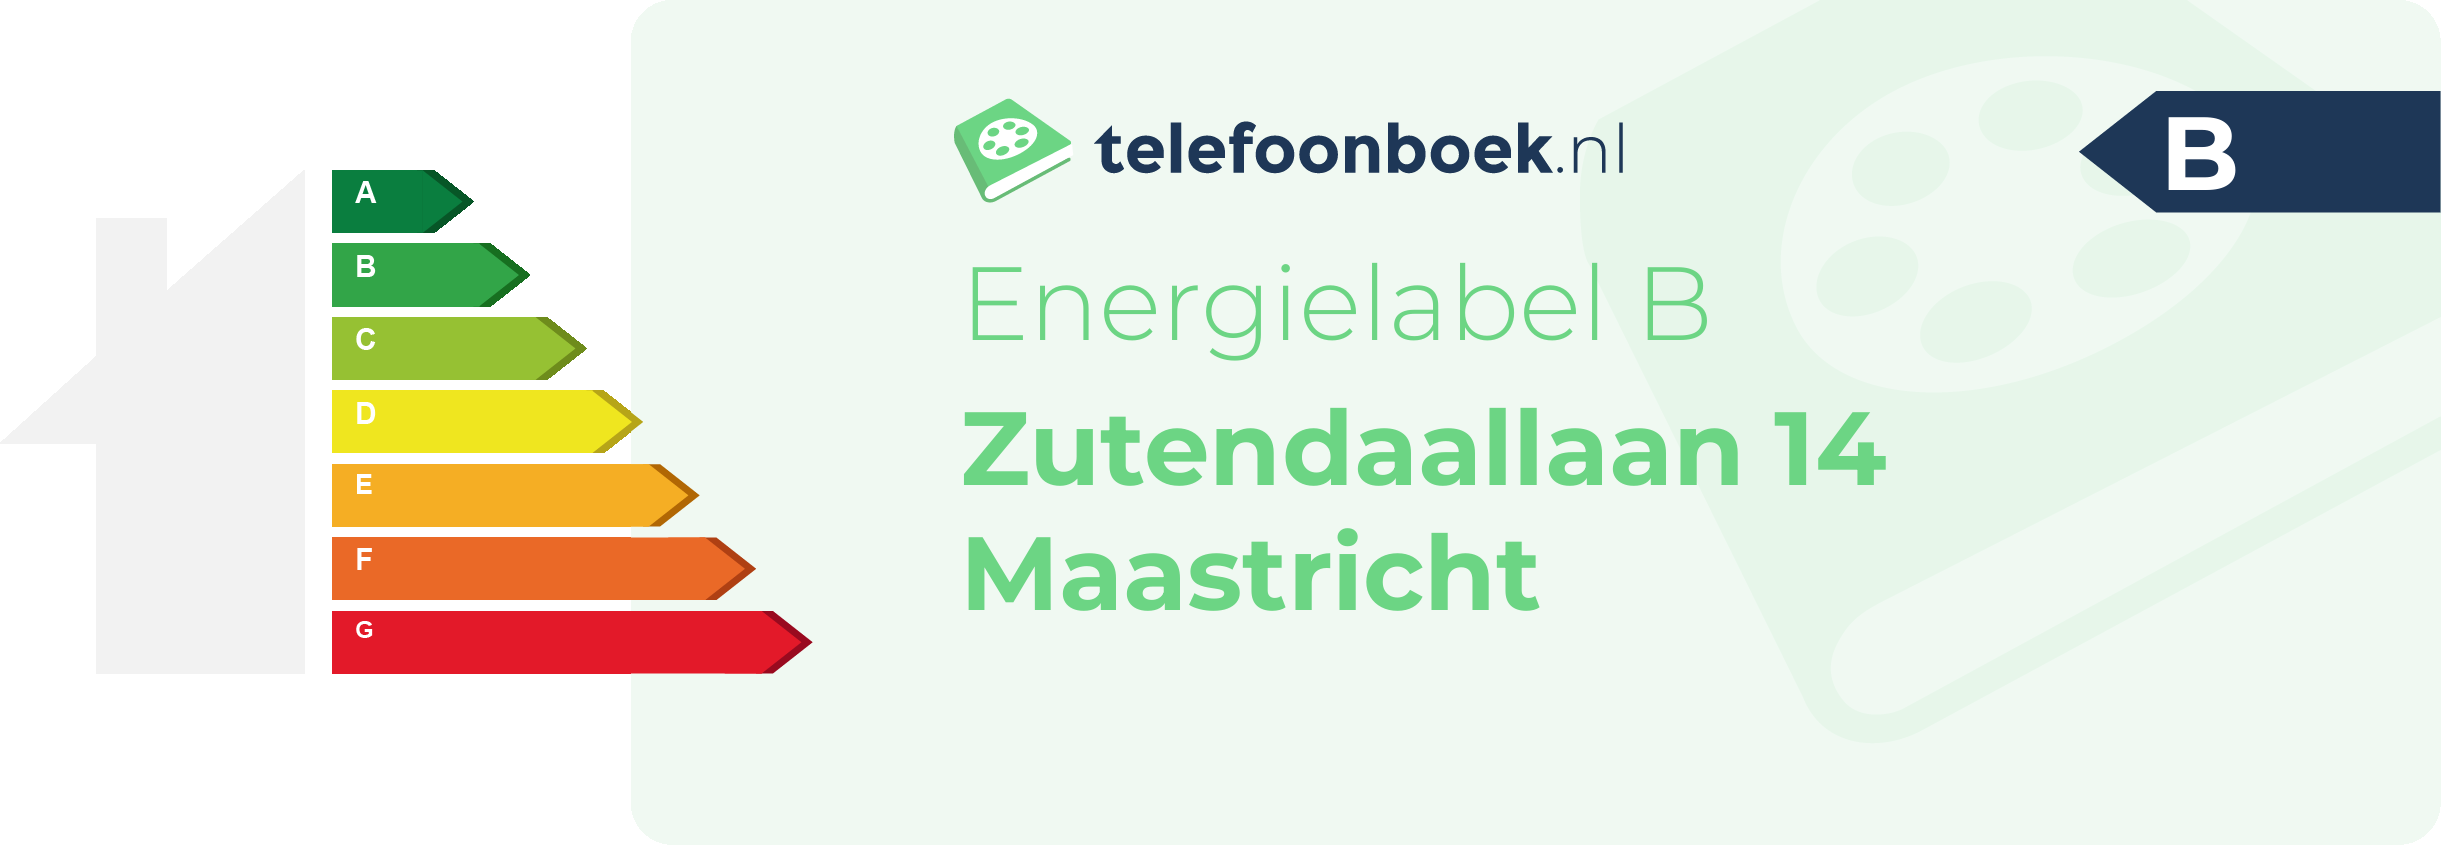 Energielabel Zutendaallaan 14 Maastricht